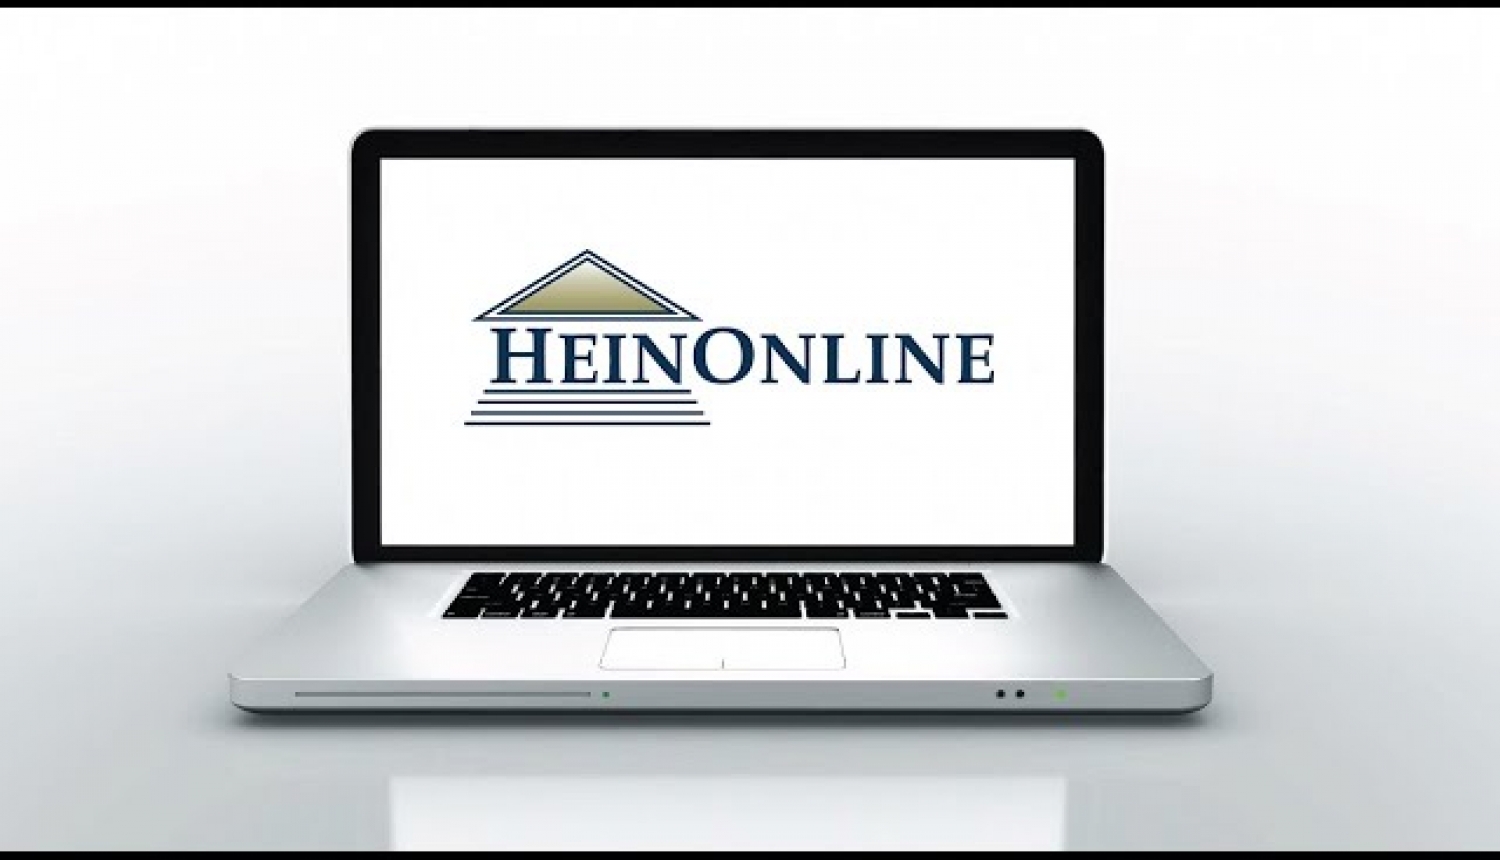 Heinonline